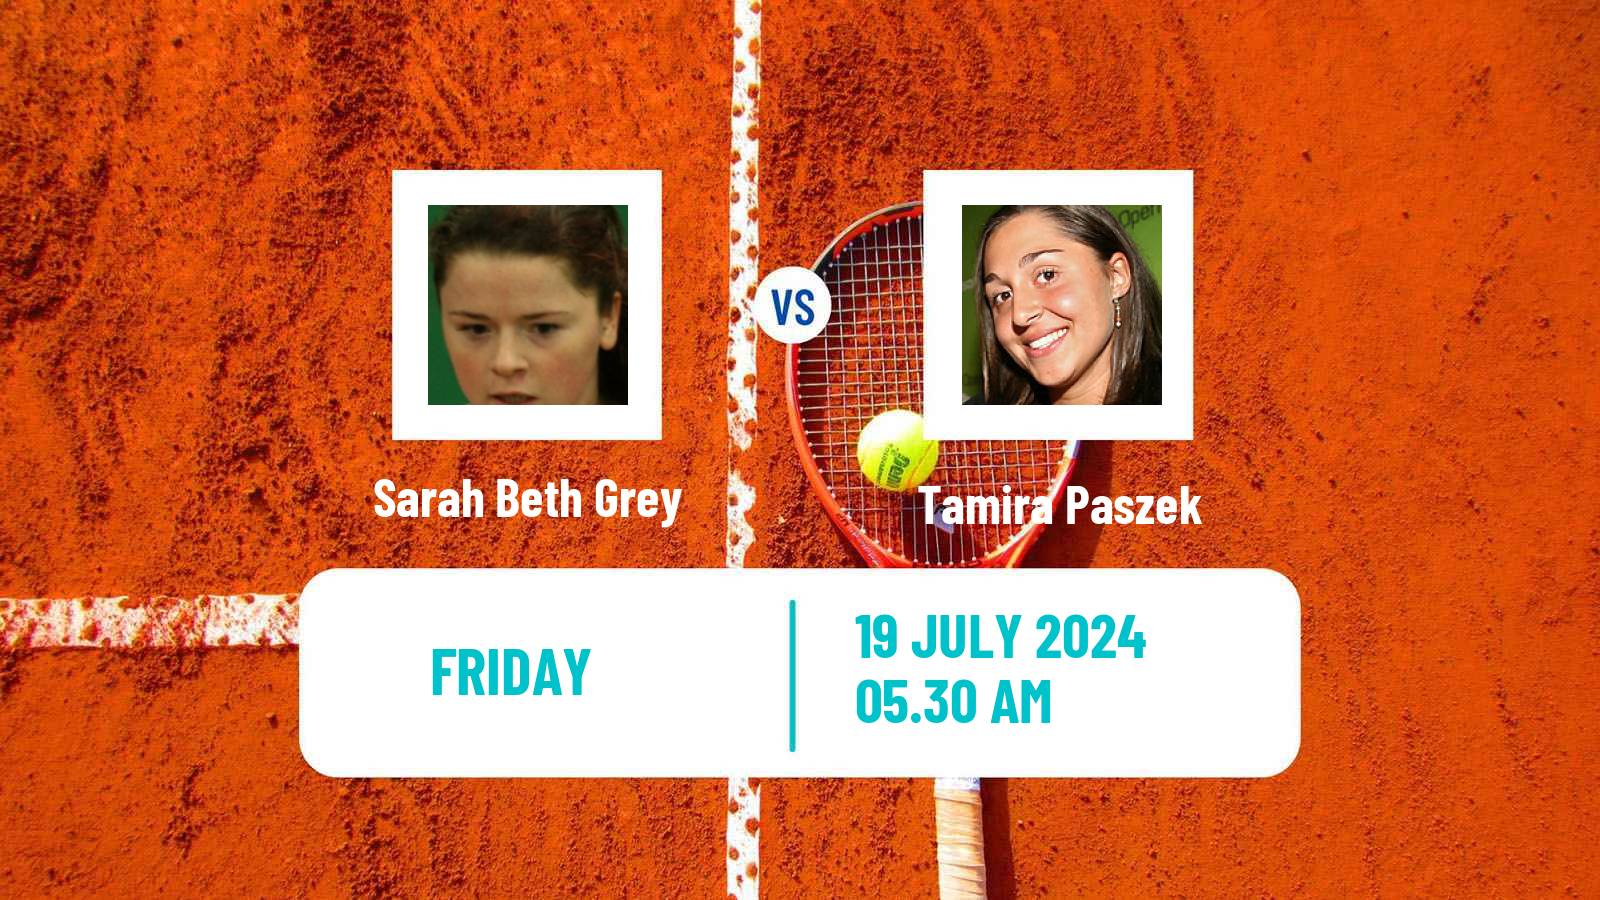 Tennis ITF W50 Nottingham Women Sarah Beth Grey - Tamira Paszek